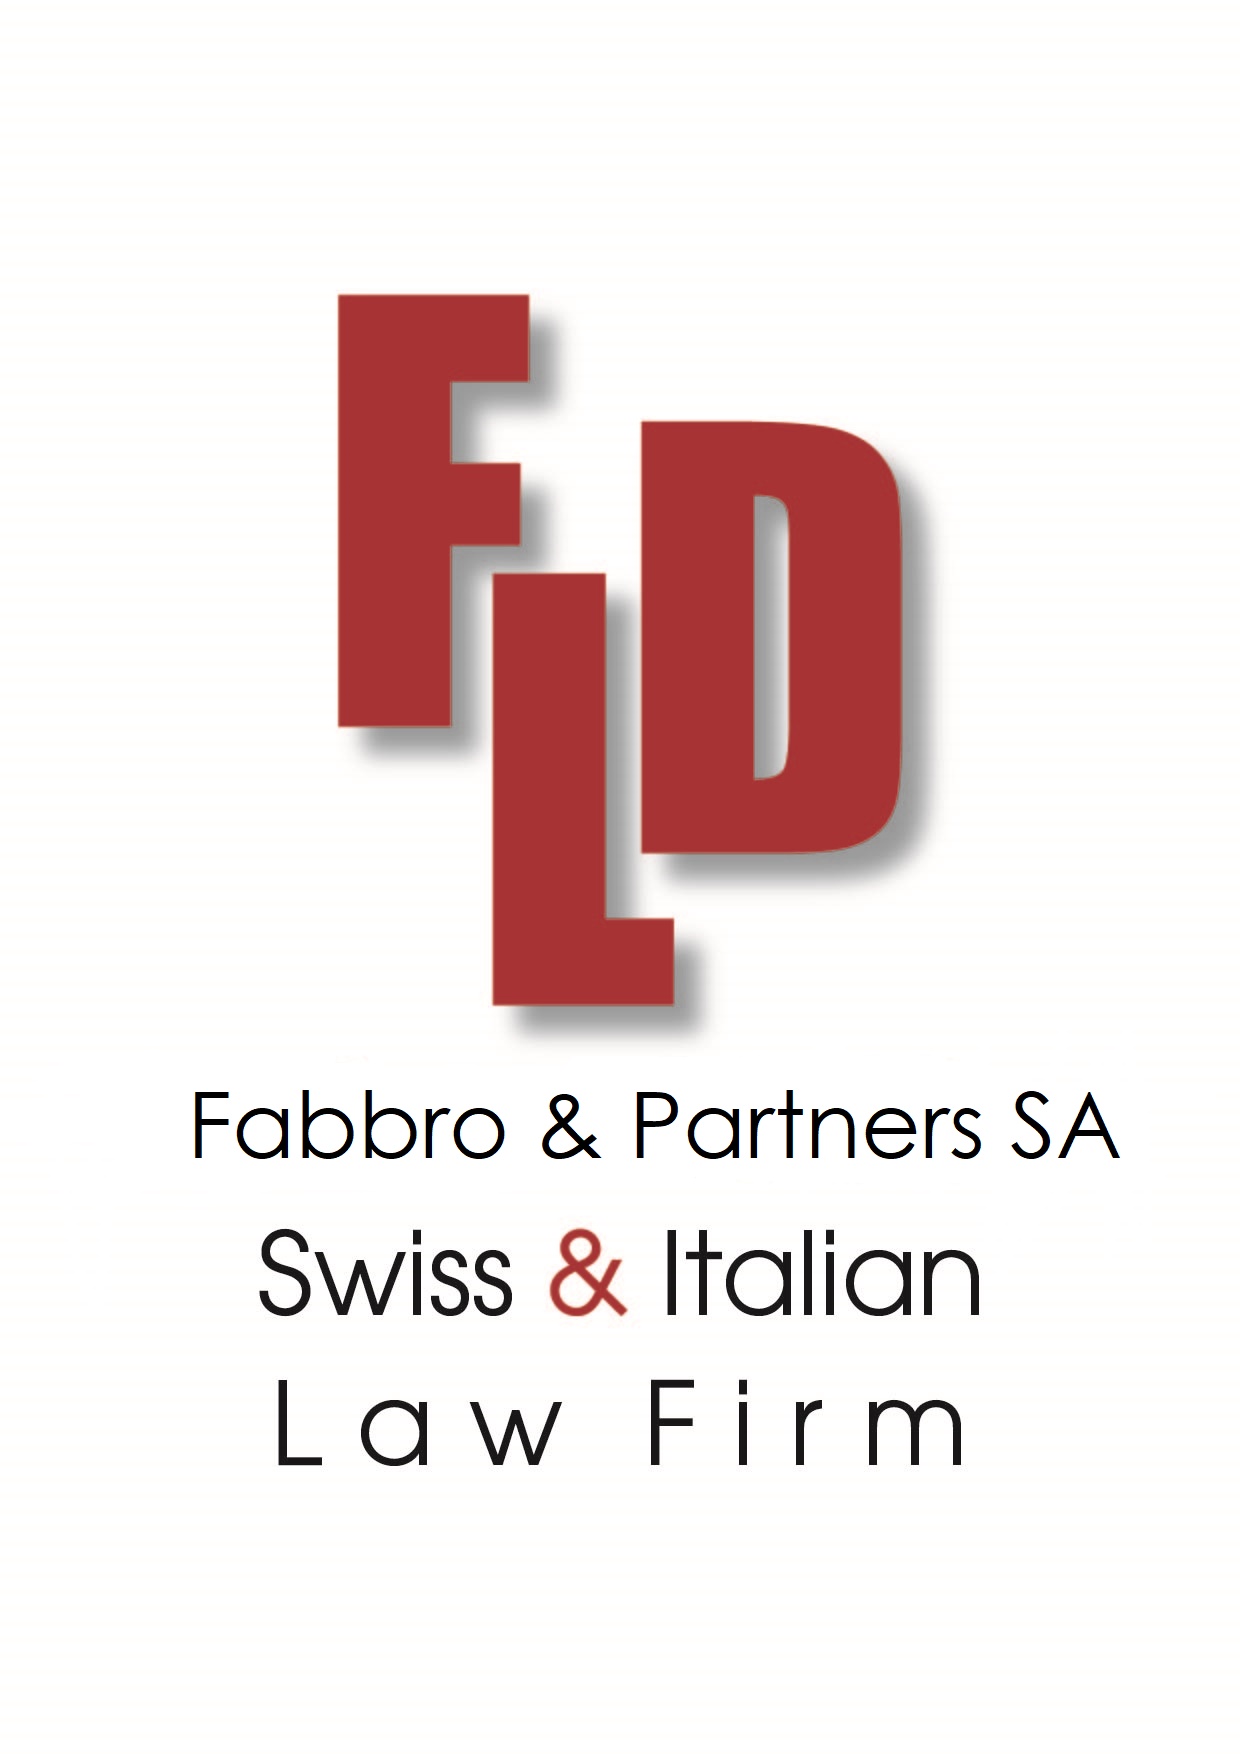 FLD_ Fabbro & Partners LOGO (002)